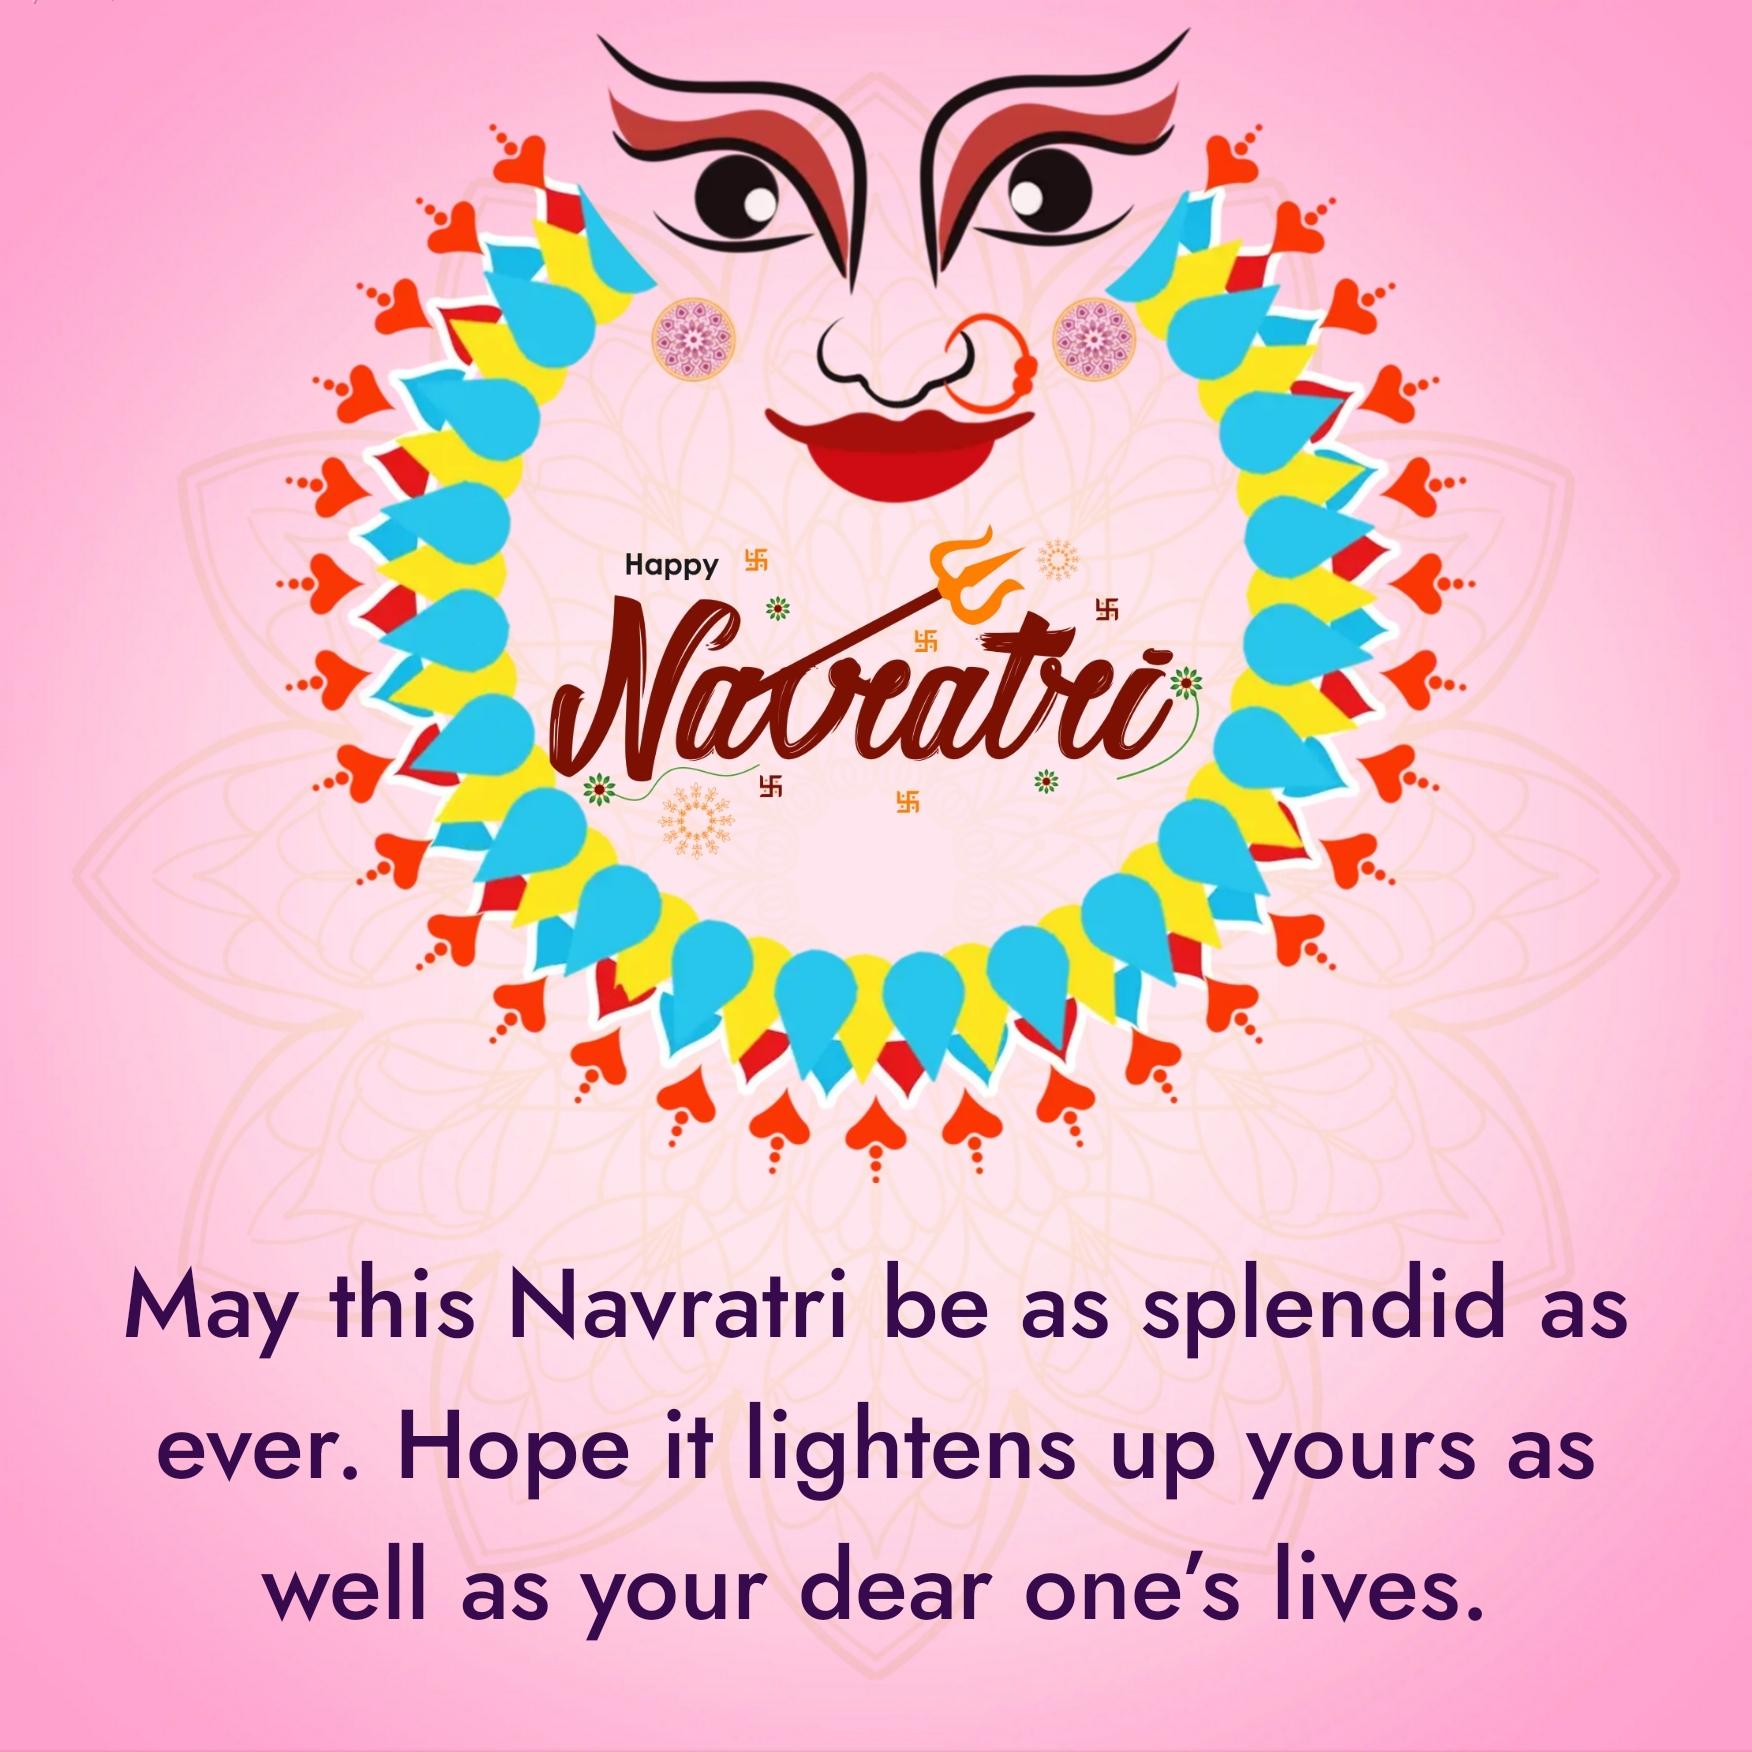 May this Navratri be as splendid as ever